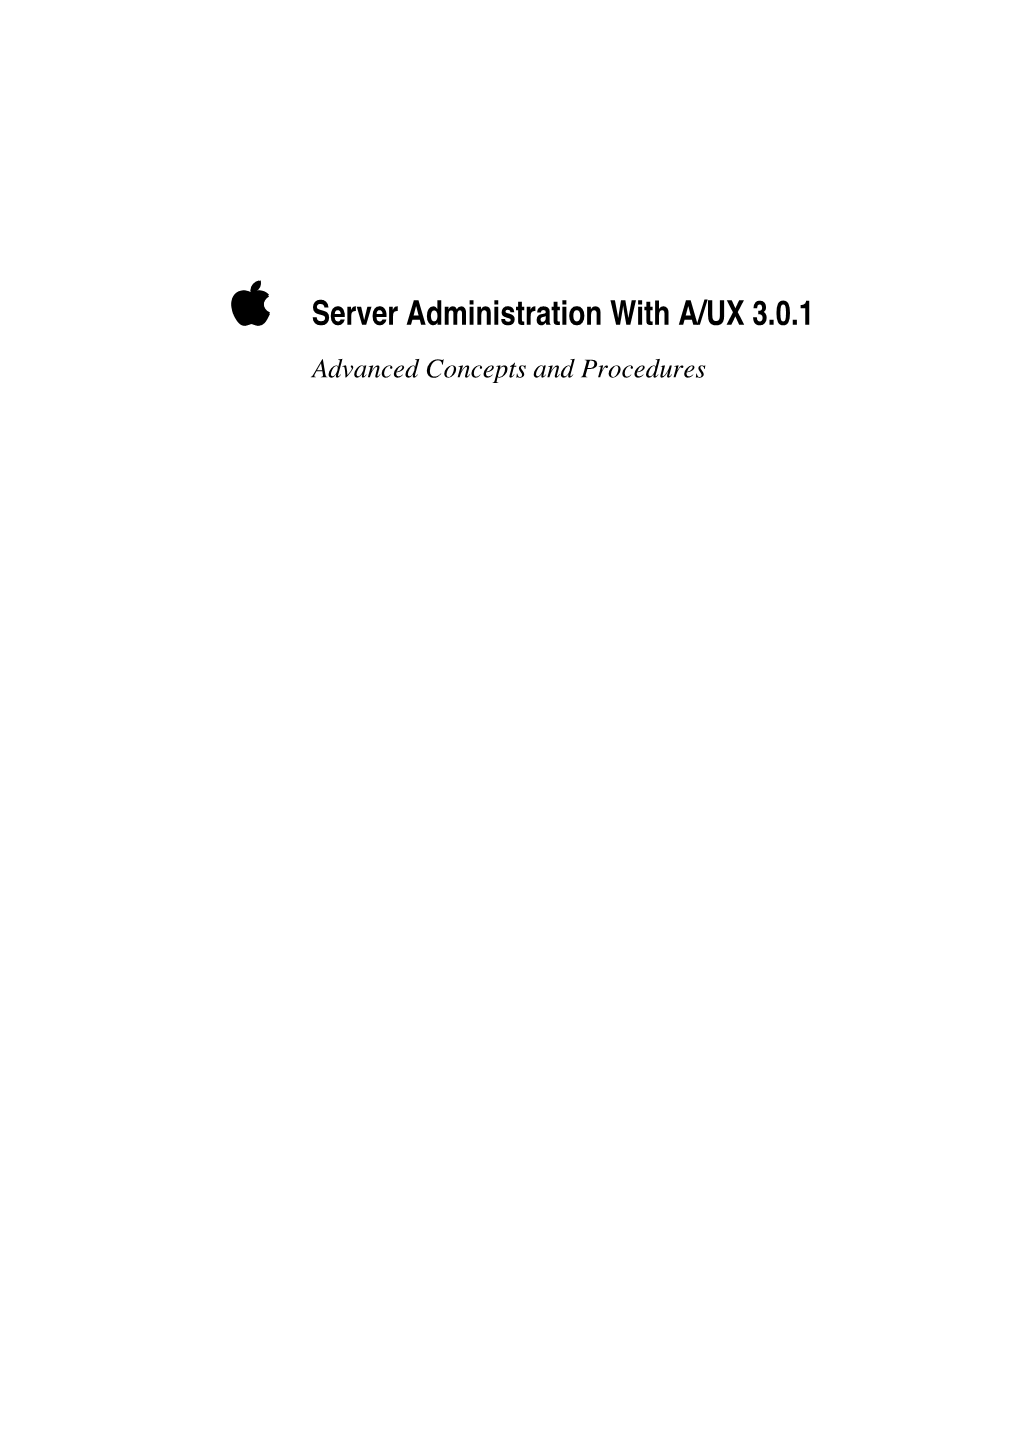 Server Admin for A/UX 3.0.1